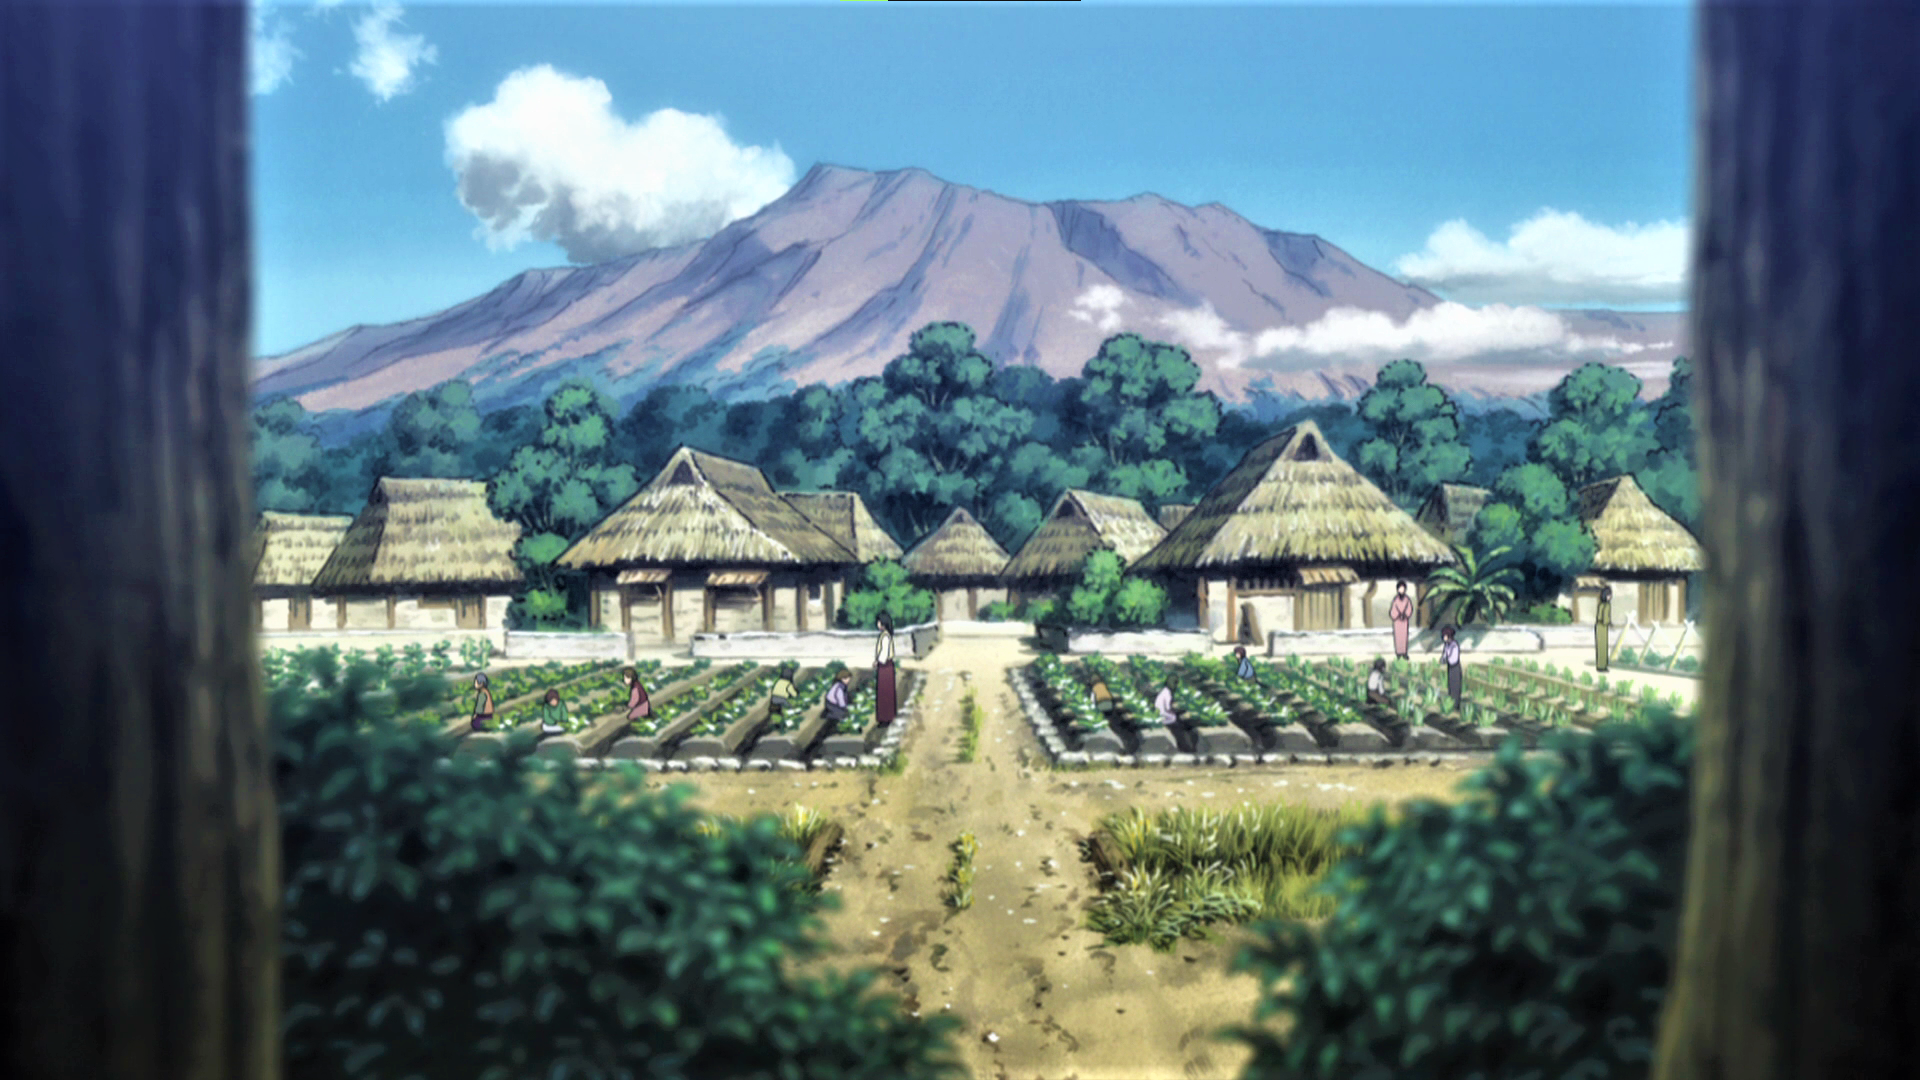 Hunter X Hunter House Trees Mountains Clouds Sky Field Anime Anime Screenshot 1920x1080